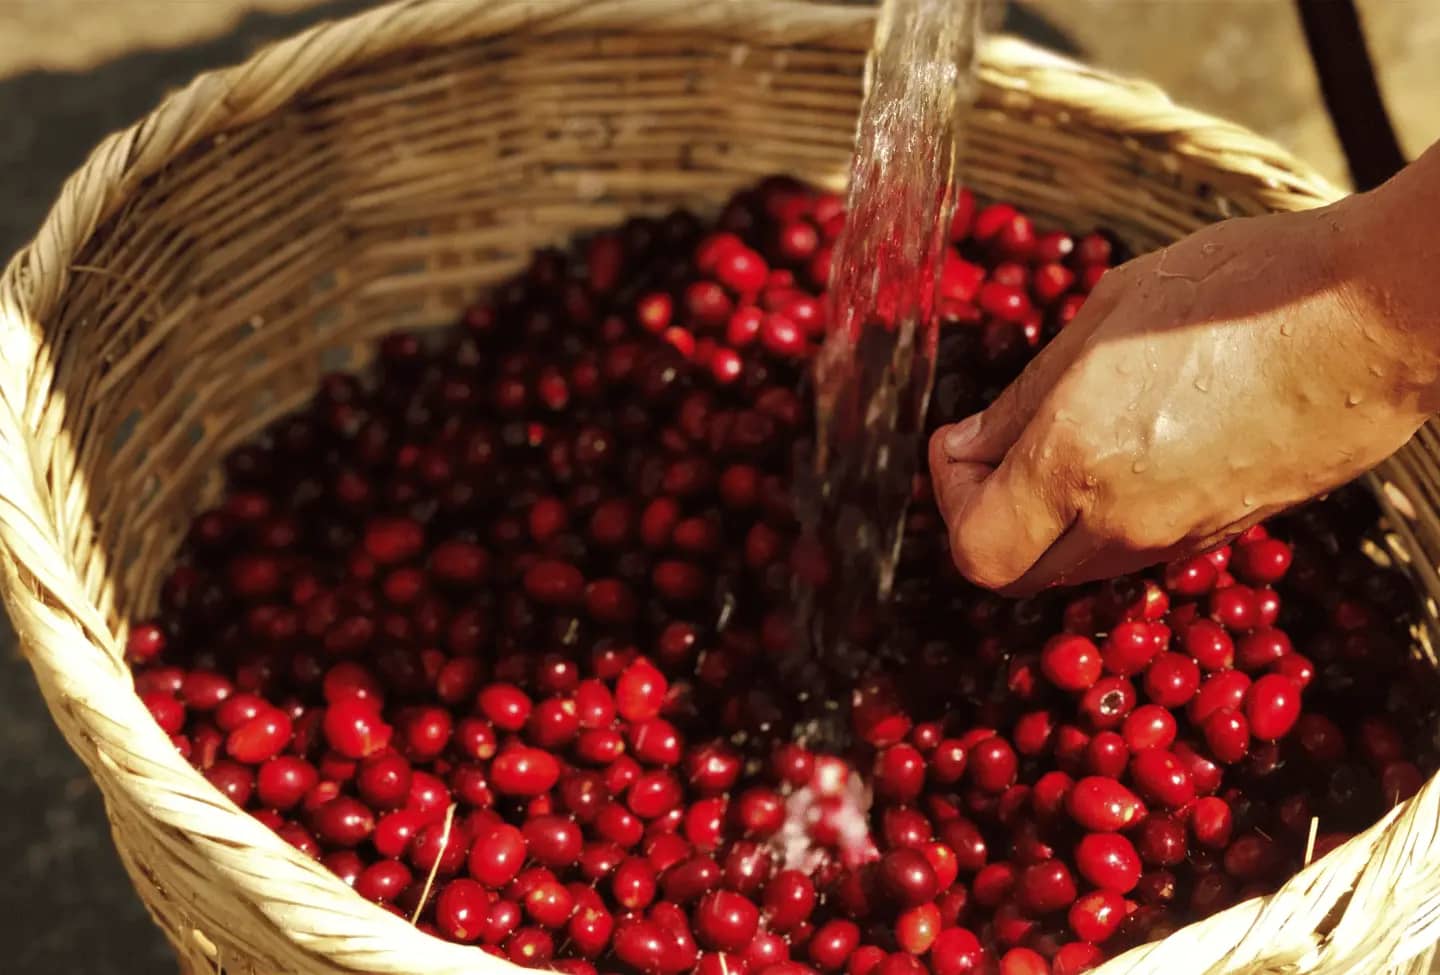 Yunnan Coffee Cherries. Coffee Cherries in a basket. Hand washed coffee cherries.